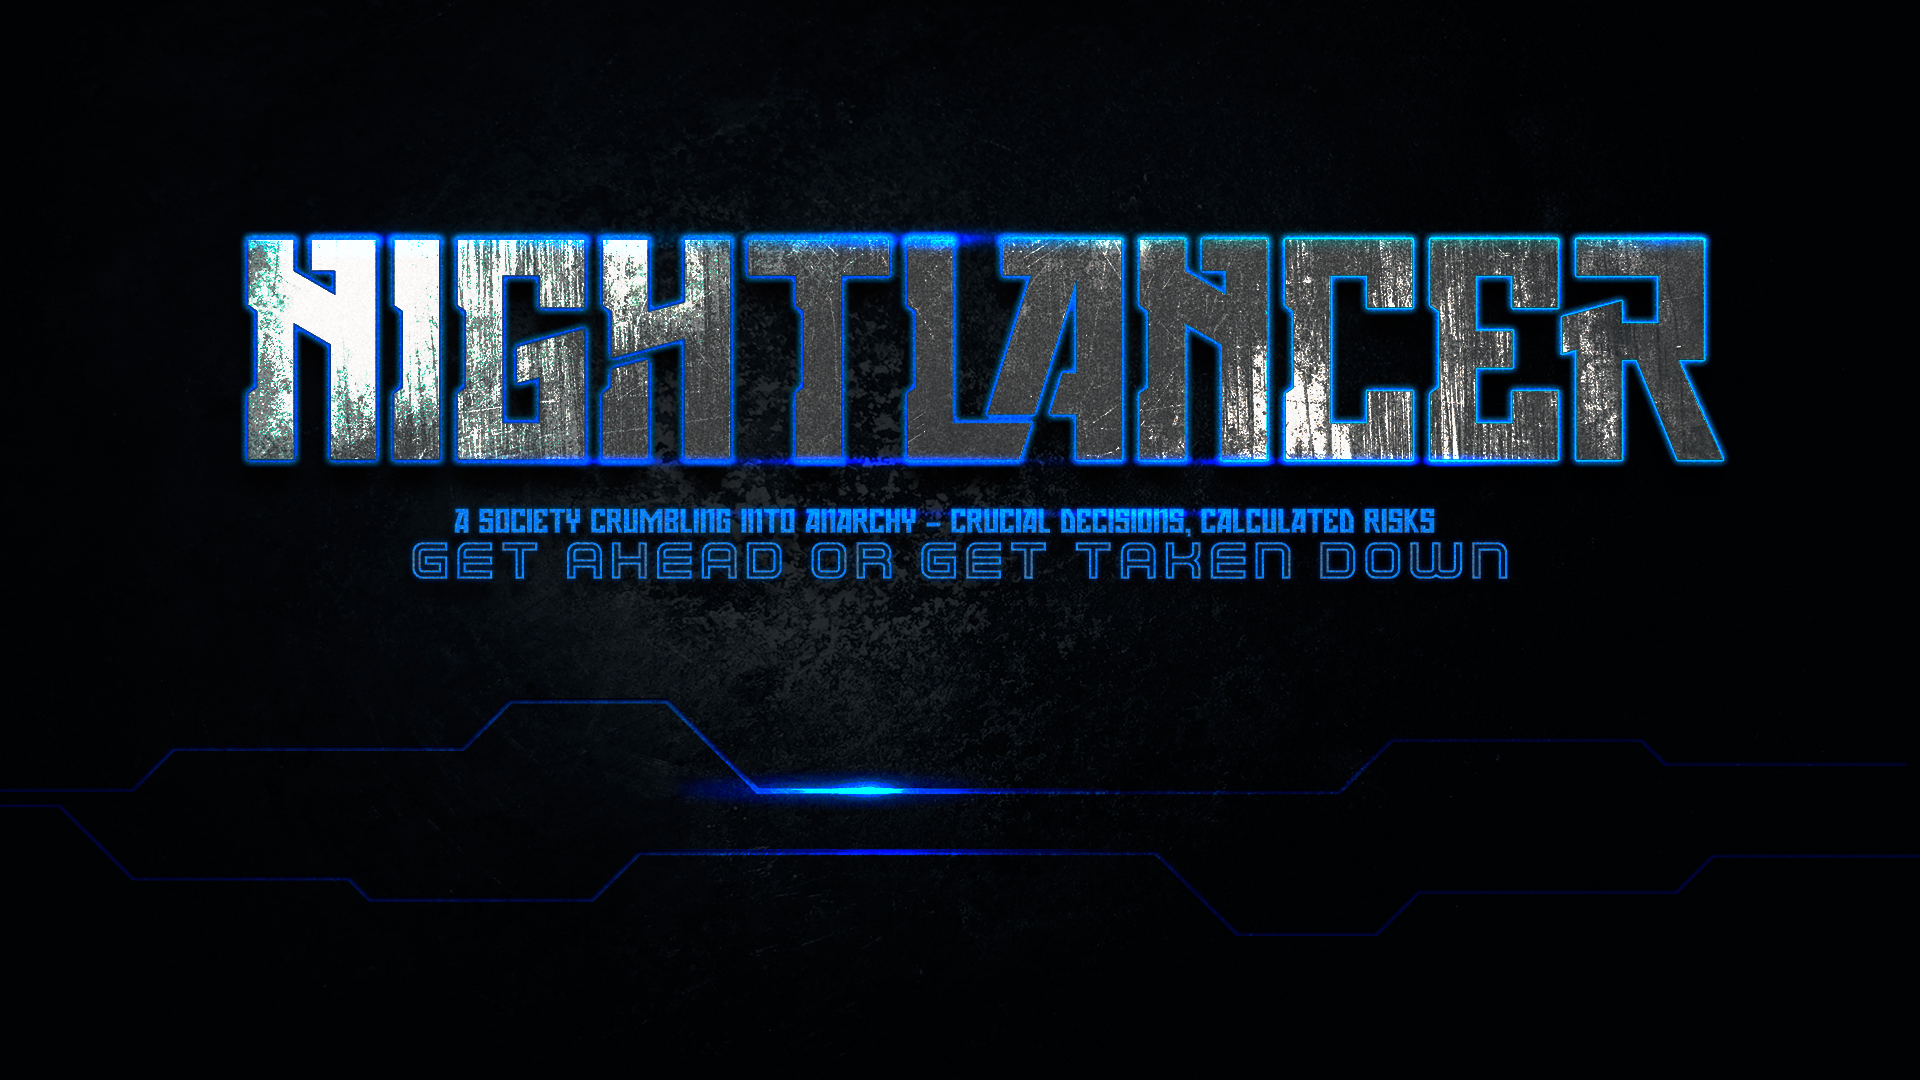 nightlancer kickstarter cyberpunk game adversity games